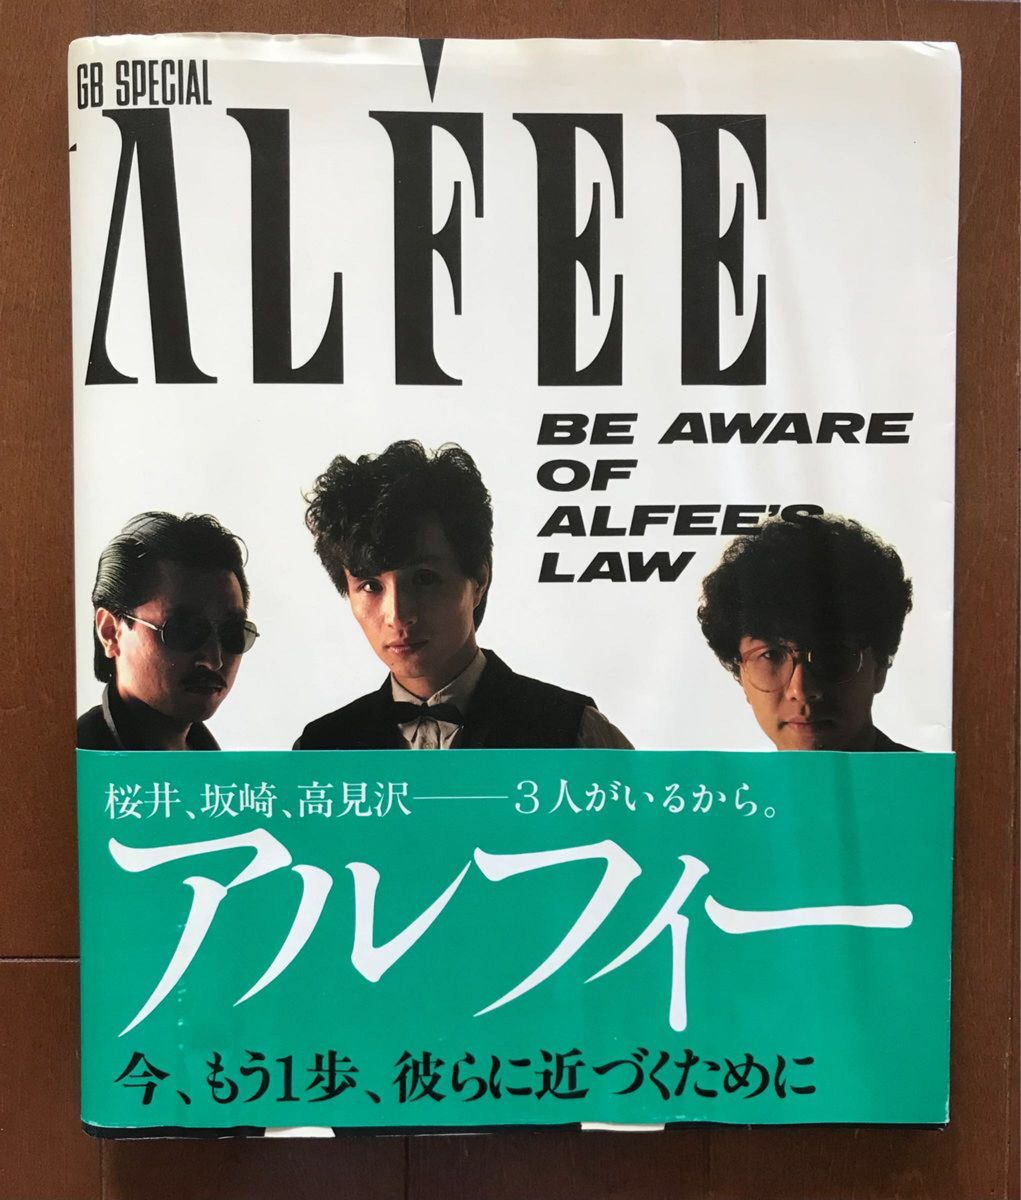 THE ALFEE 写真集 GB SPECIAL  BE AWARE OF ALFEE'S LAW  & メモパッド